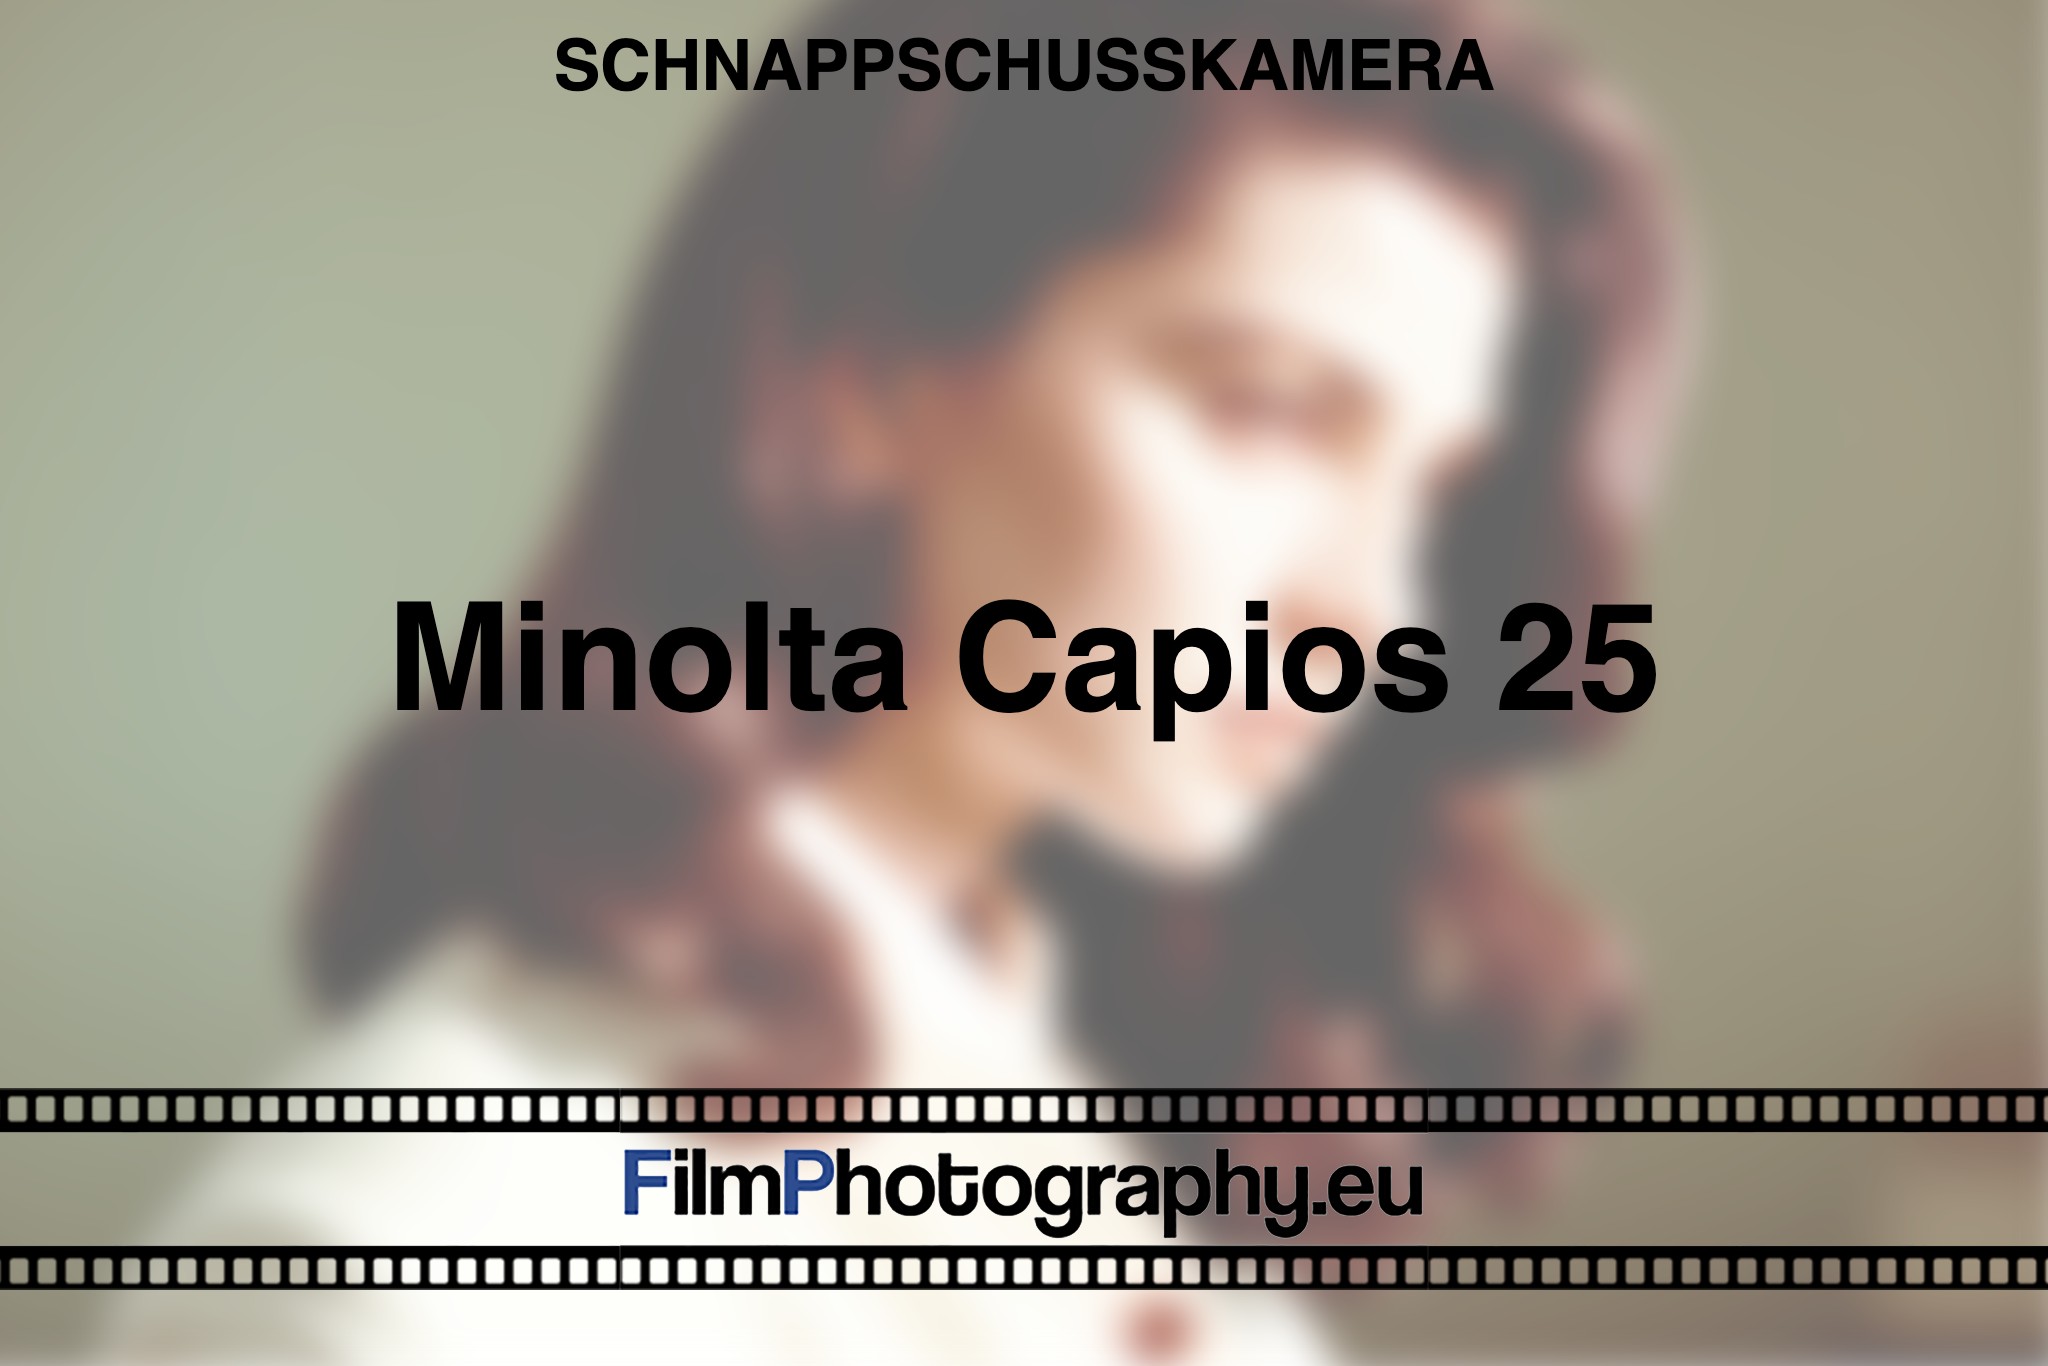 minolta-capios-25-schnappschusskamera-bnv